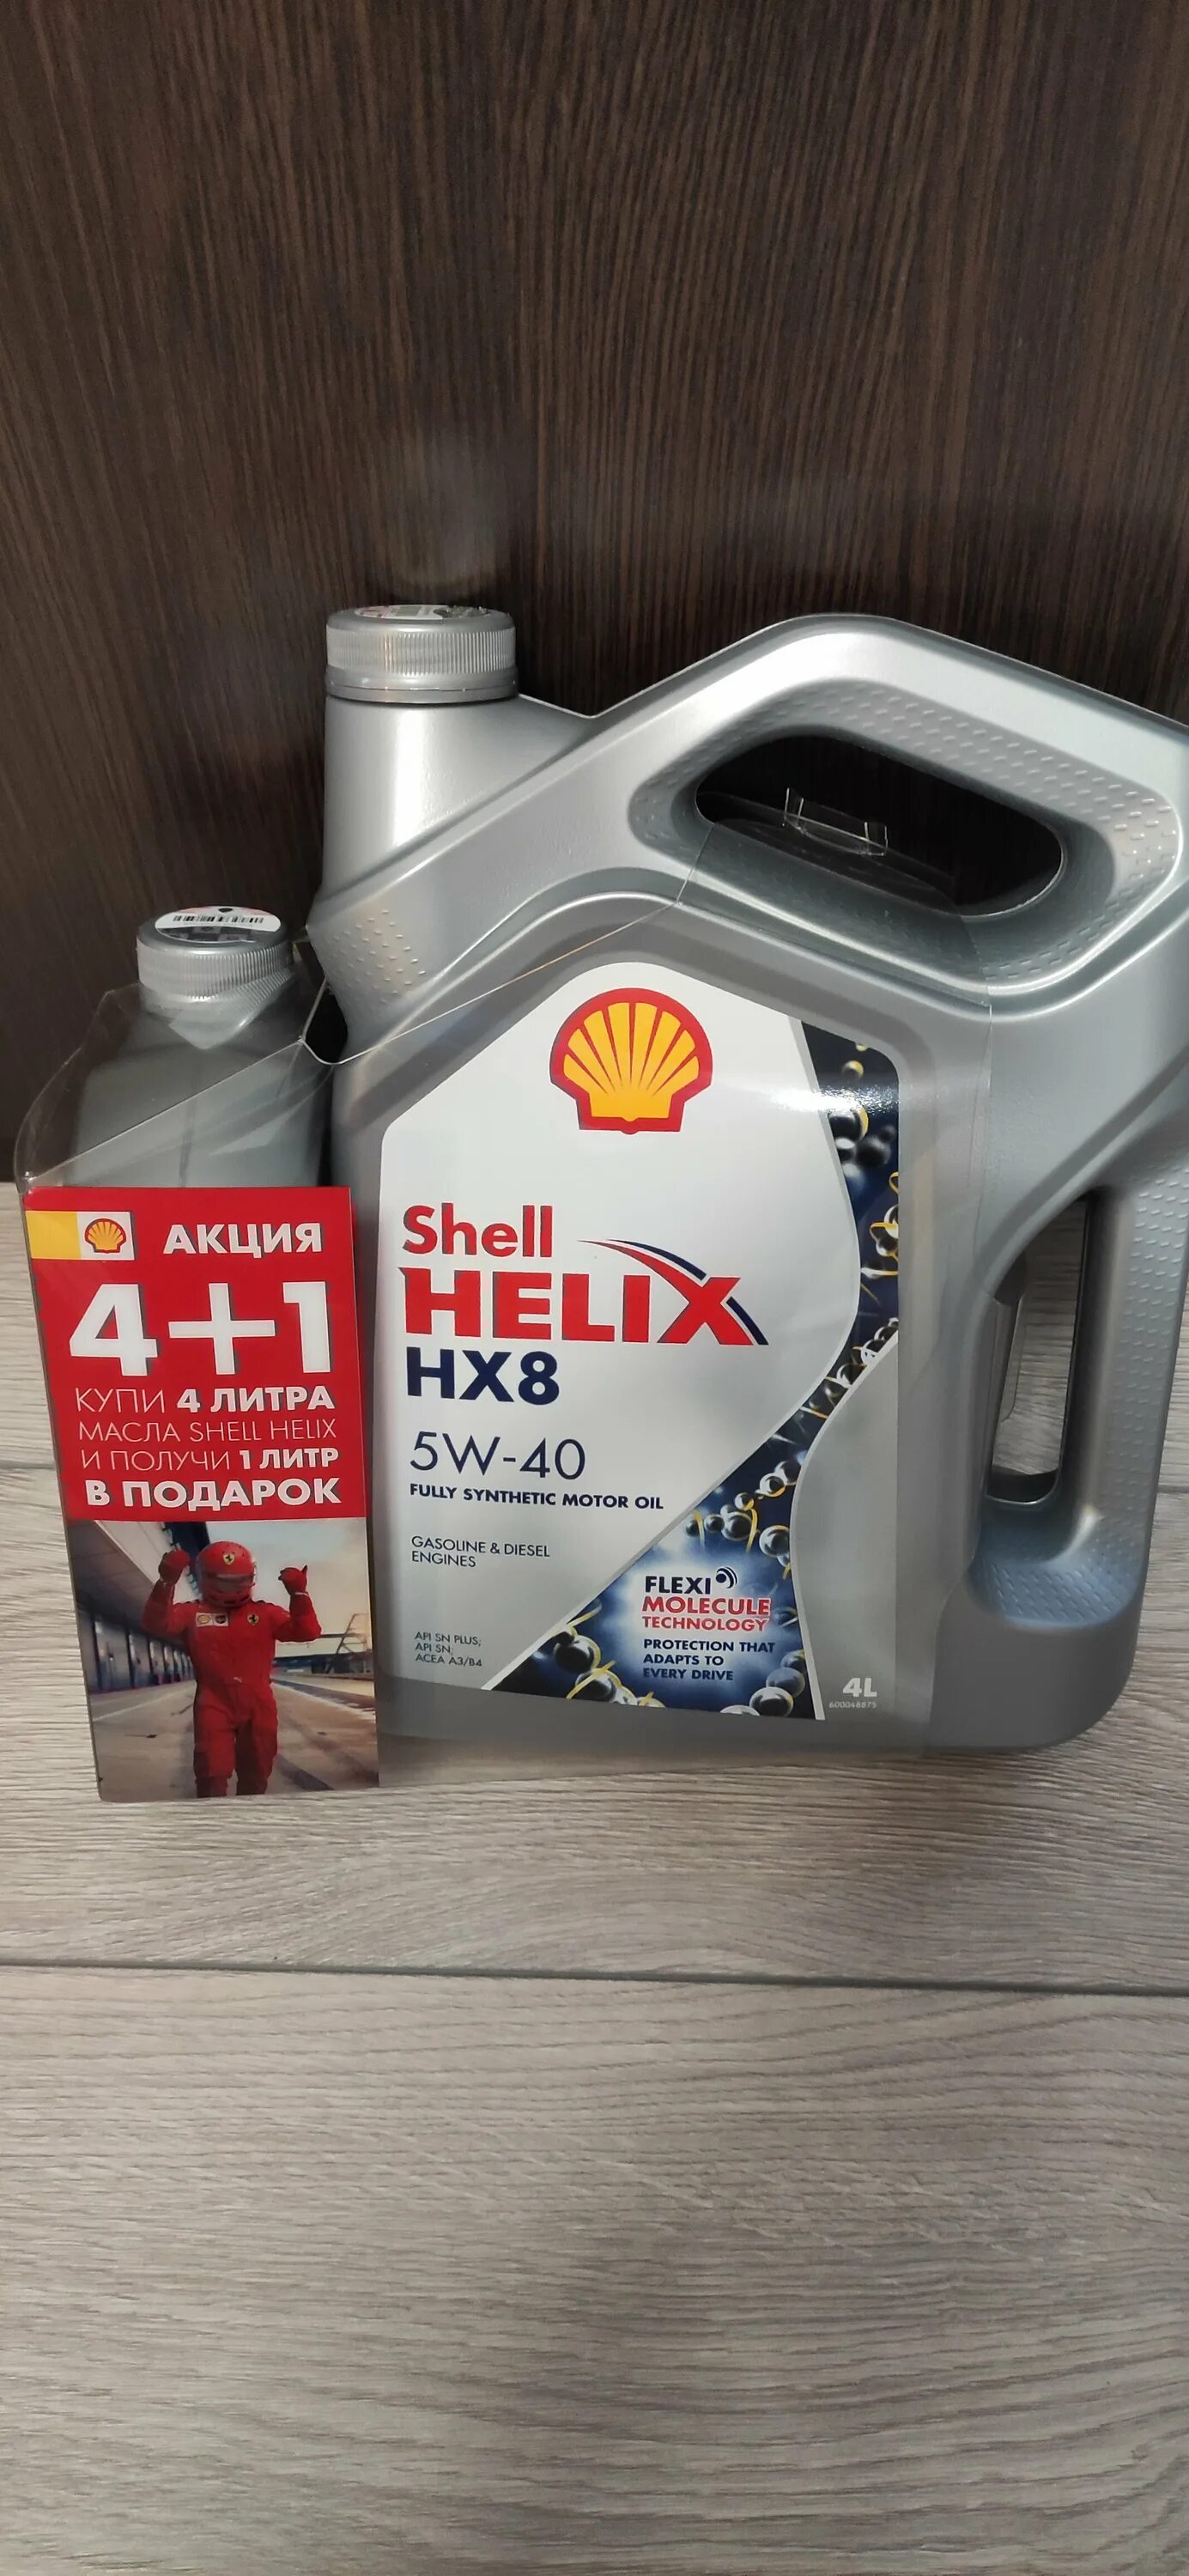 Shell hx8 5w40. Helix hx8_5w40. Шелл Хеликс hx8 5w40.